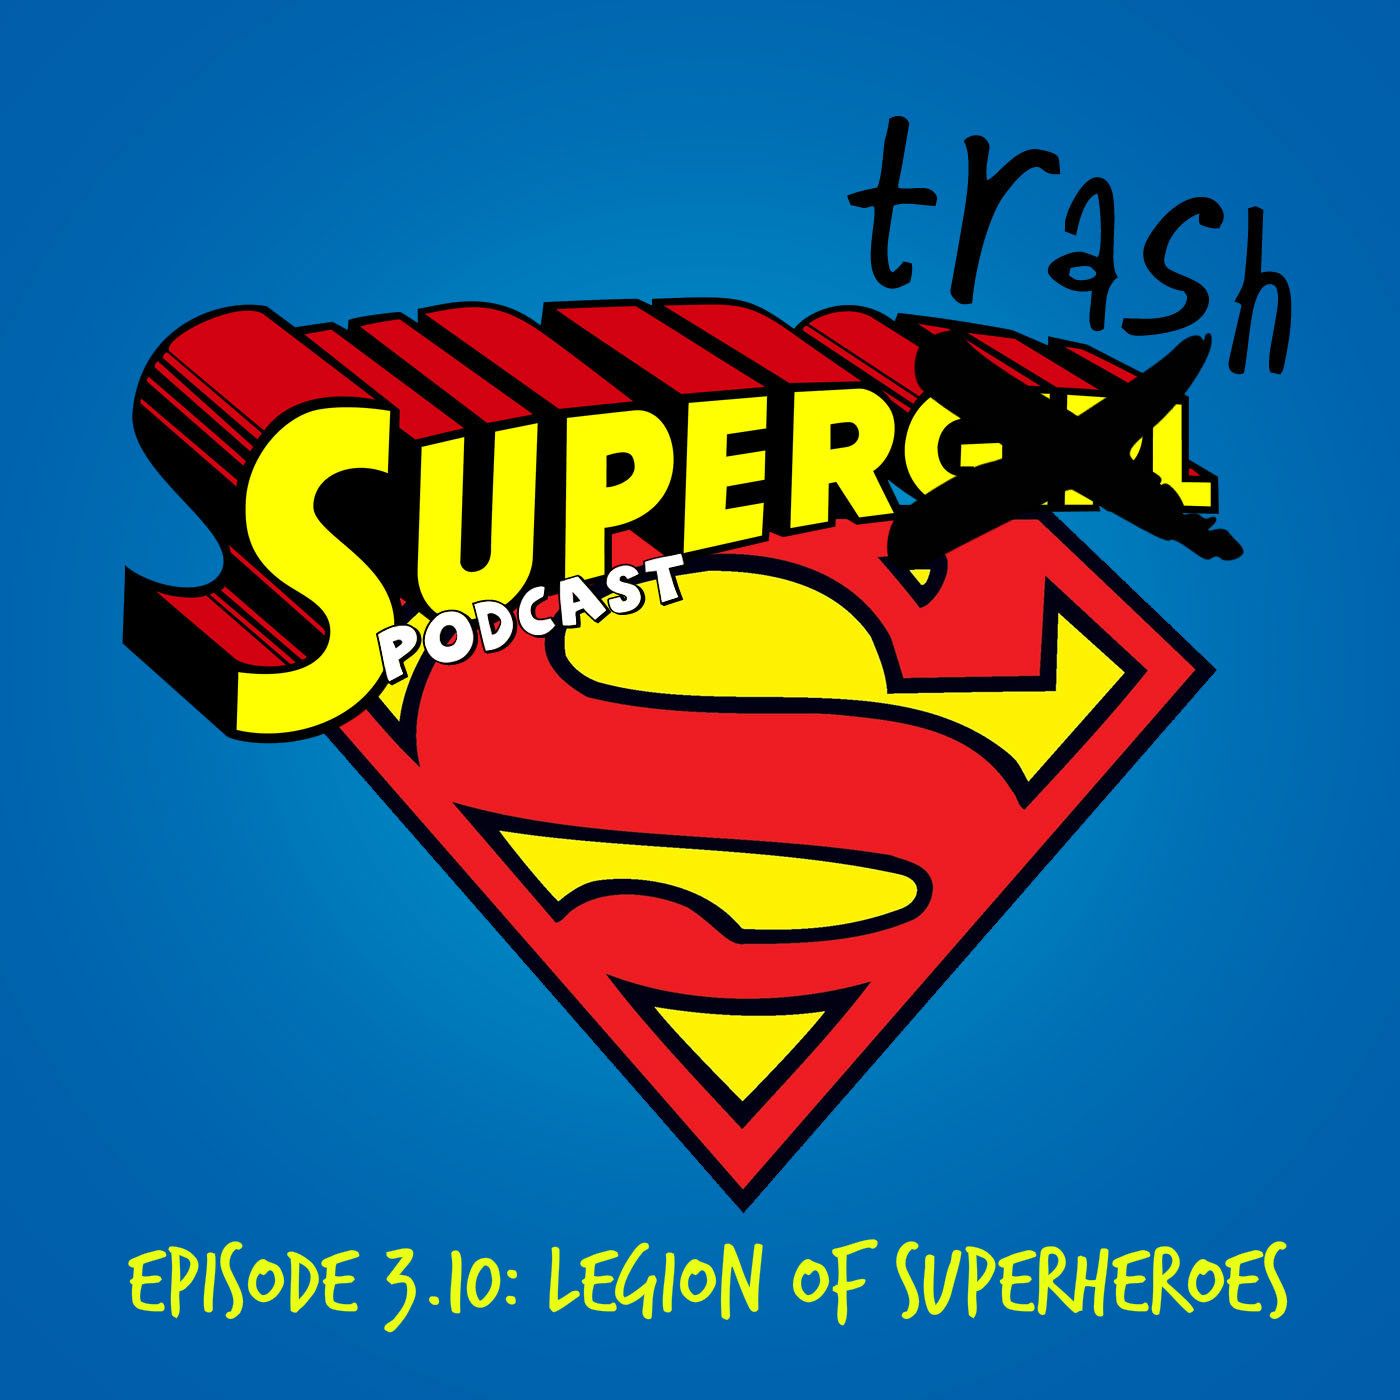 ’Supergirl’ Episode 3.10: ”Legion of Superheroes”